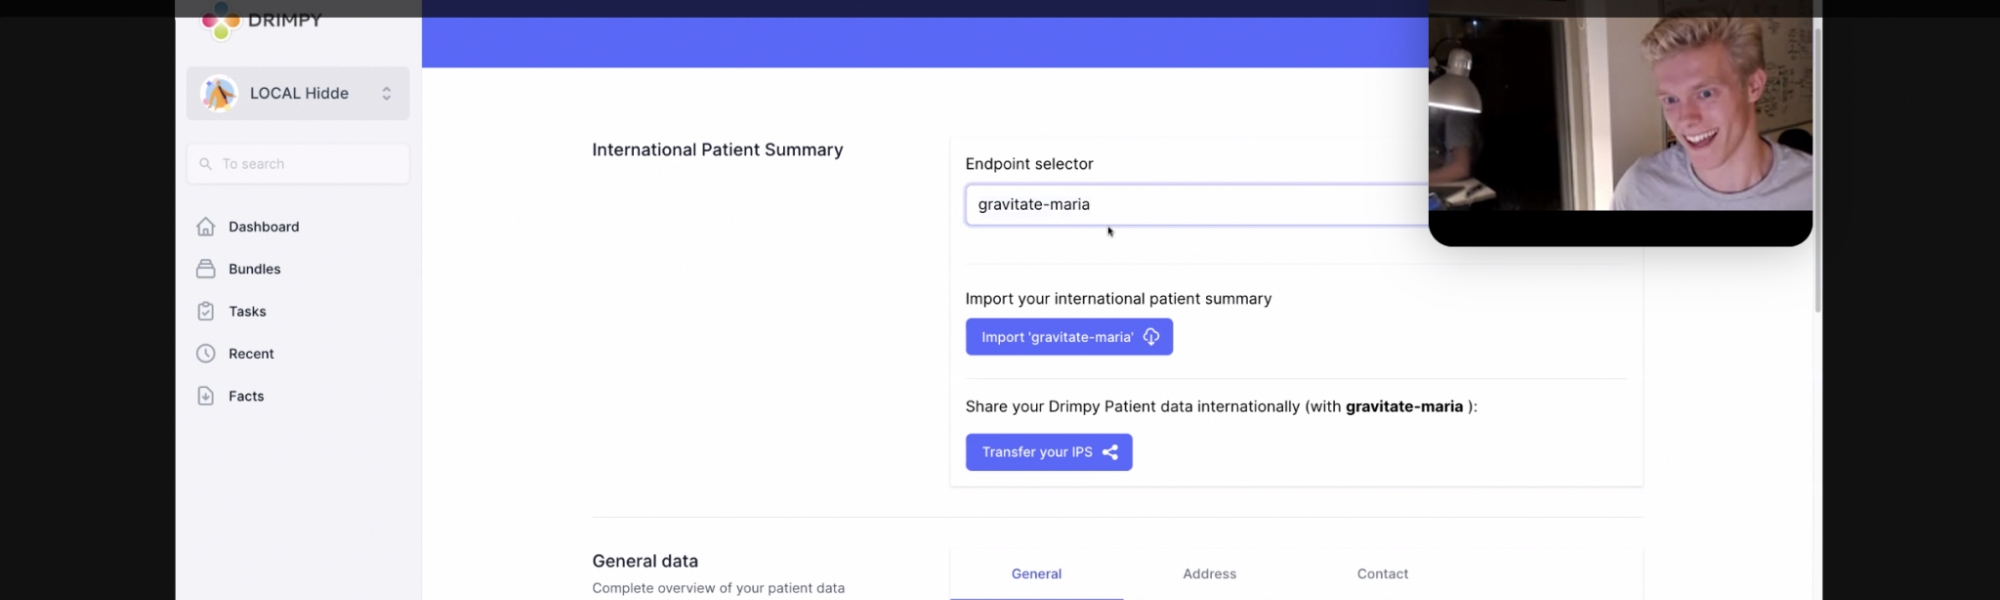 Drimpy Demo International Patient Summary (IPS)